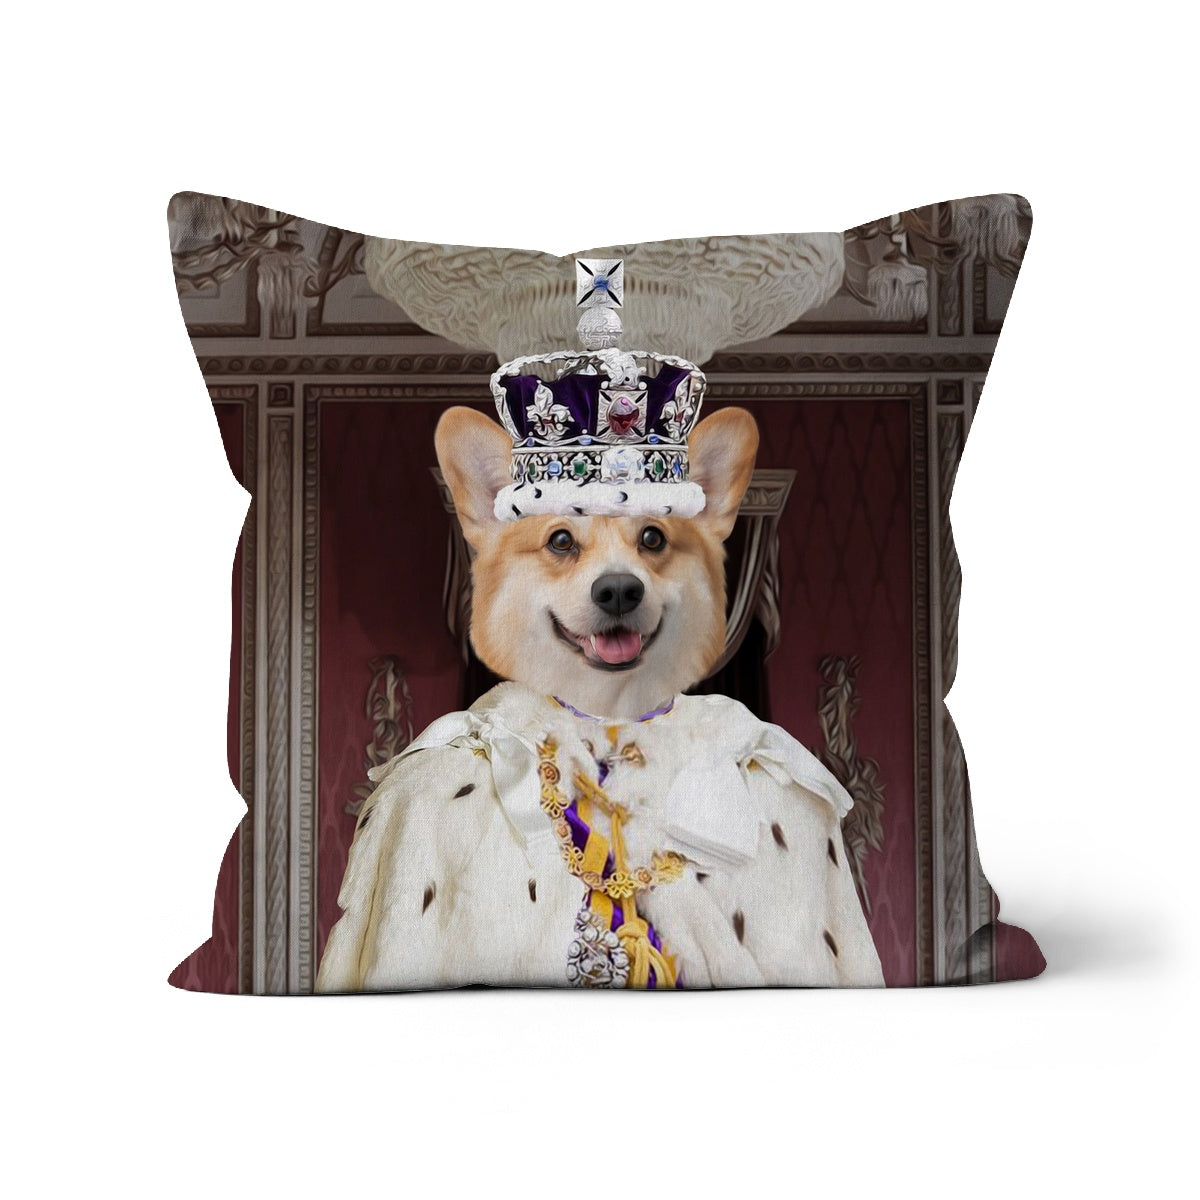 Paw & Glory, pawandglory, photo dog pillows, photo pet pillow, print pillows, custom pillow design, pillows with dogs picture, best custom pet pillow, Pet Portrait cushion,